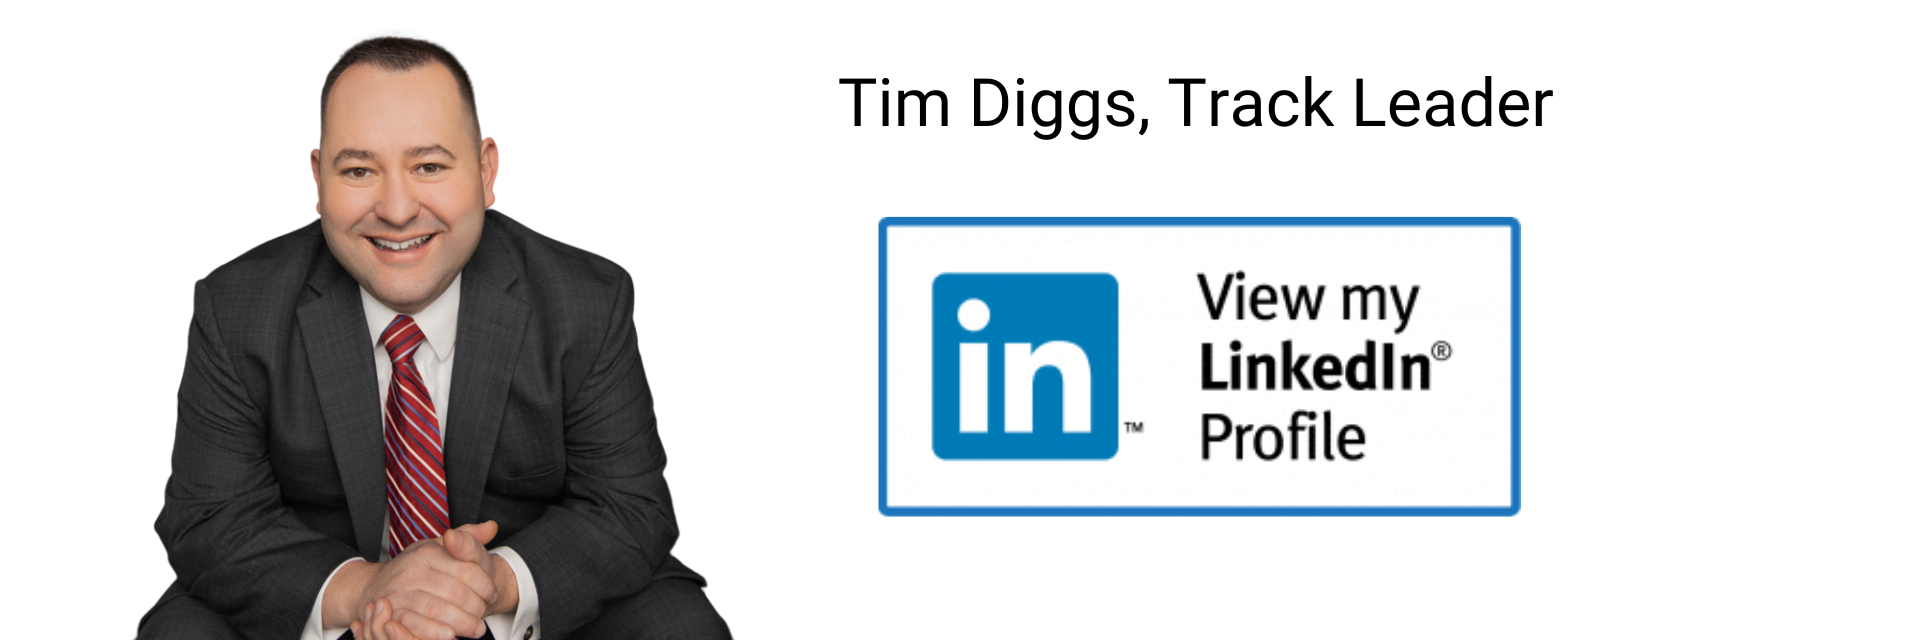 Tim Diggs